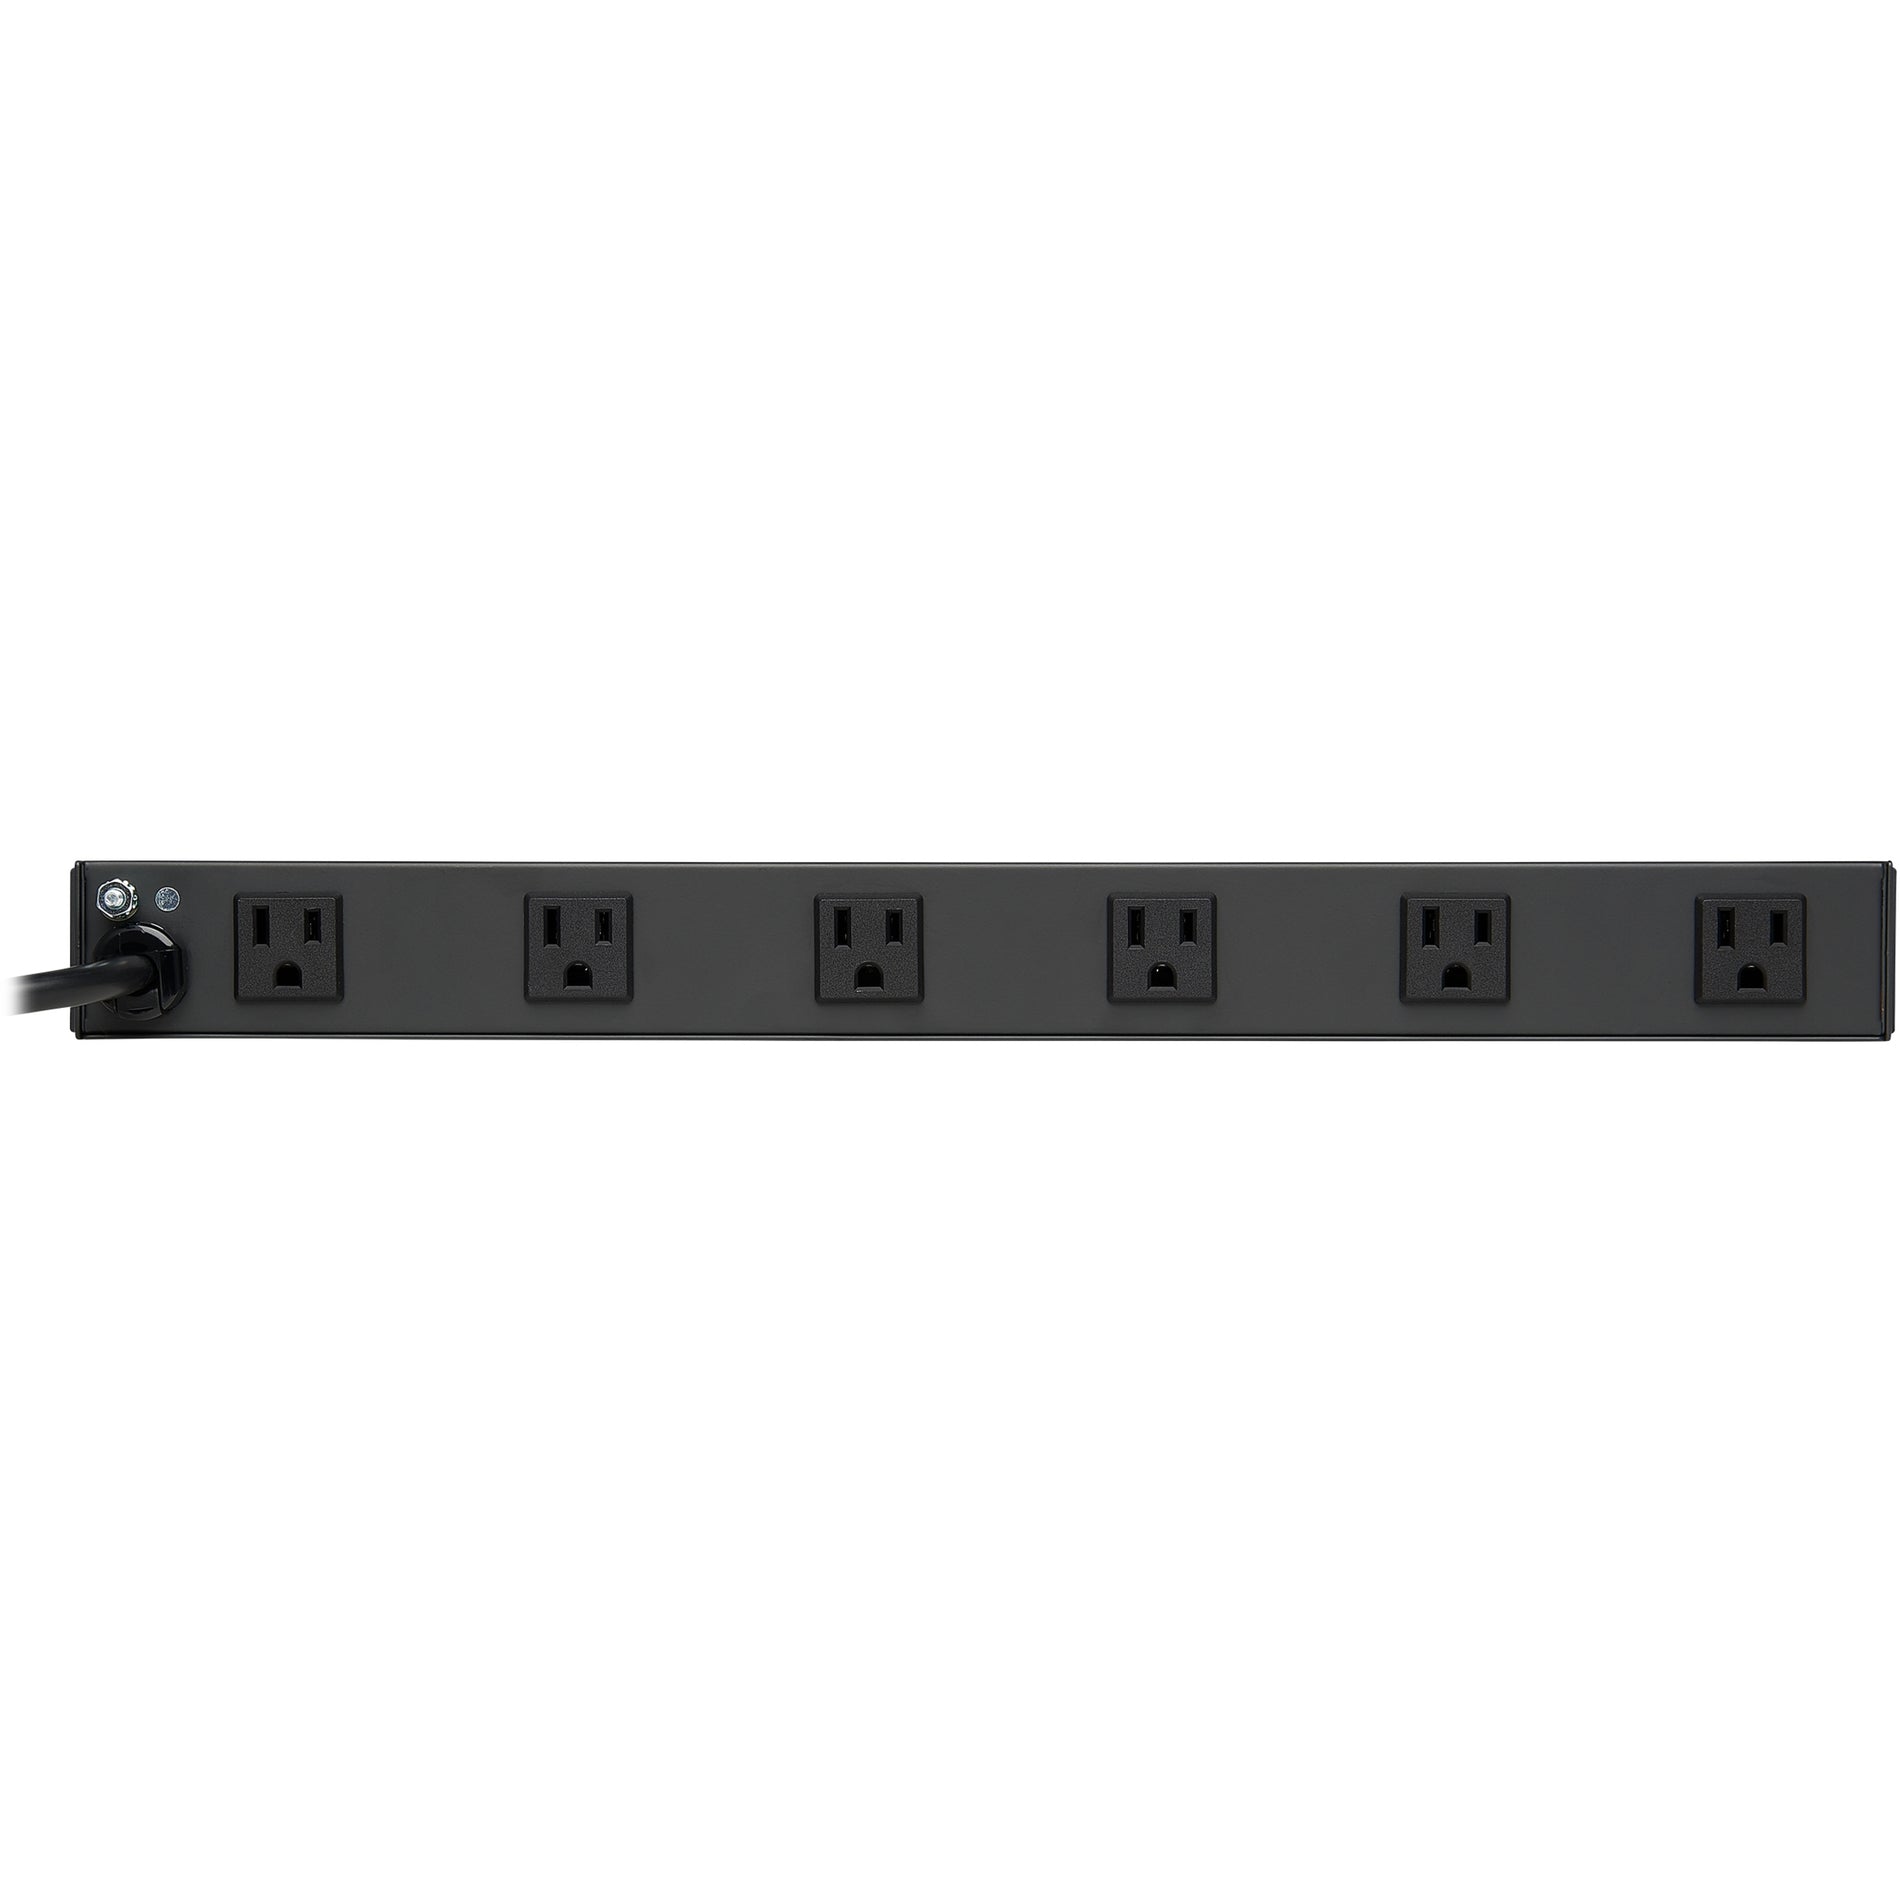 Tripp Lite RS-1215-RA パワーストリップ 120V AC、12コンセント、15フィートコード、ラックマウント可能  トリップライト 商品名